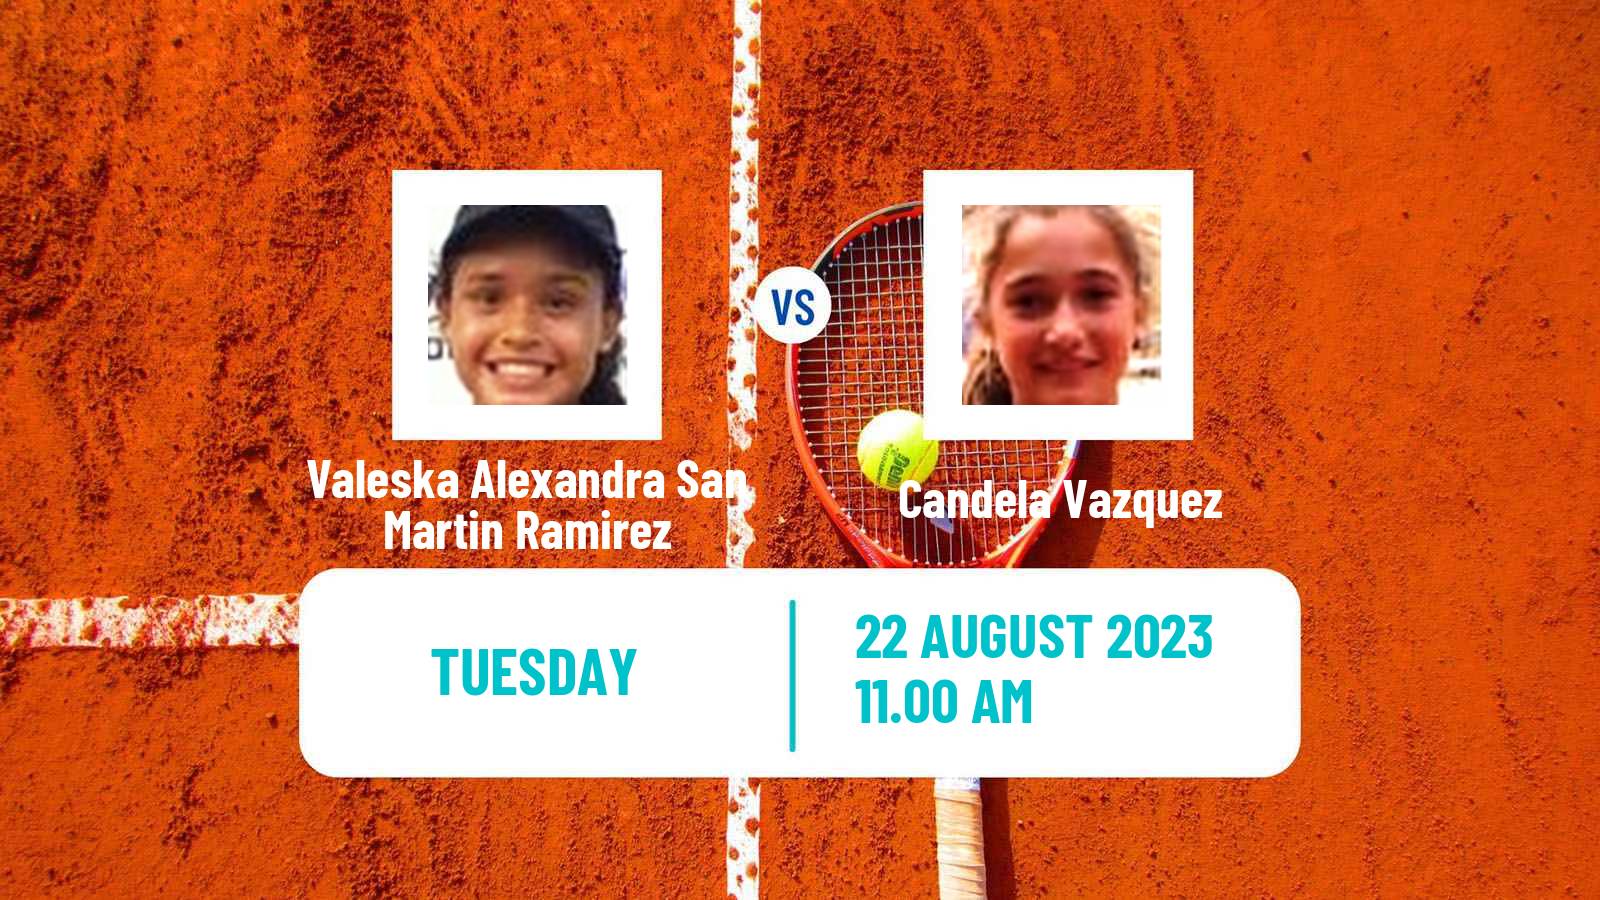 Tennis ITF W15 Lima Women Valeska Alexandra San Martin Ramirez - Candela Vazquez